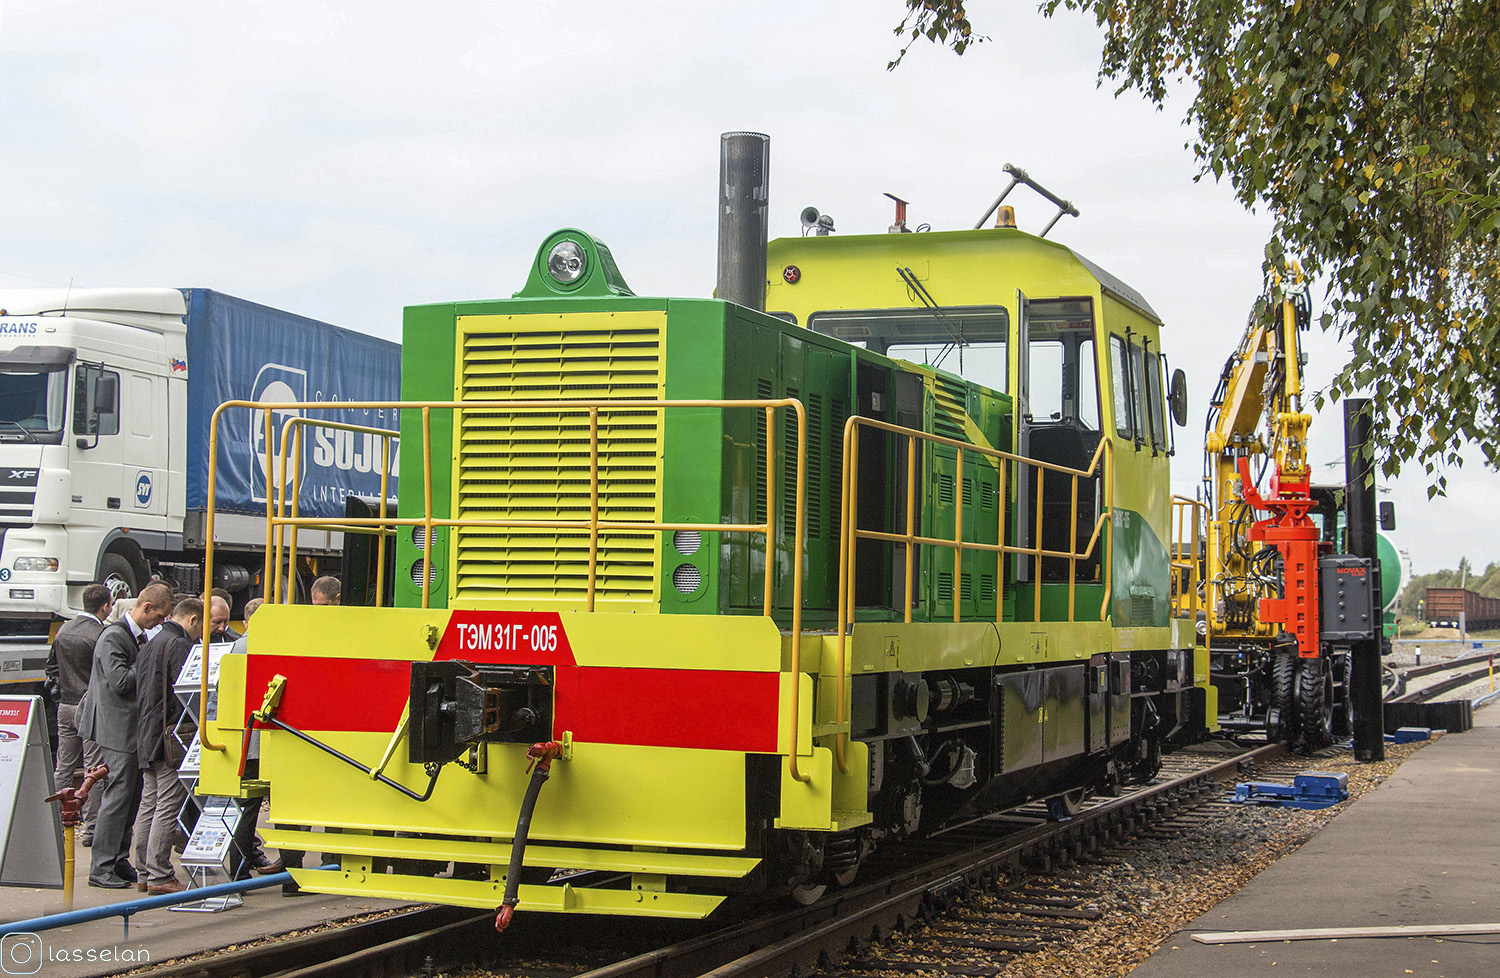 ТЭМ31Г-005; Moscow Railway — The 4th International Rail Salon EXPO 1520